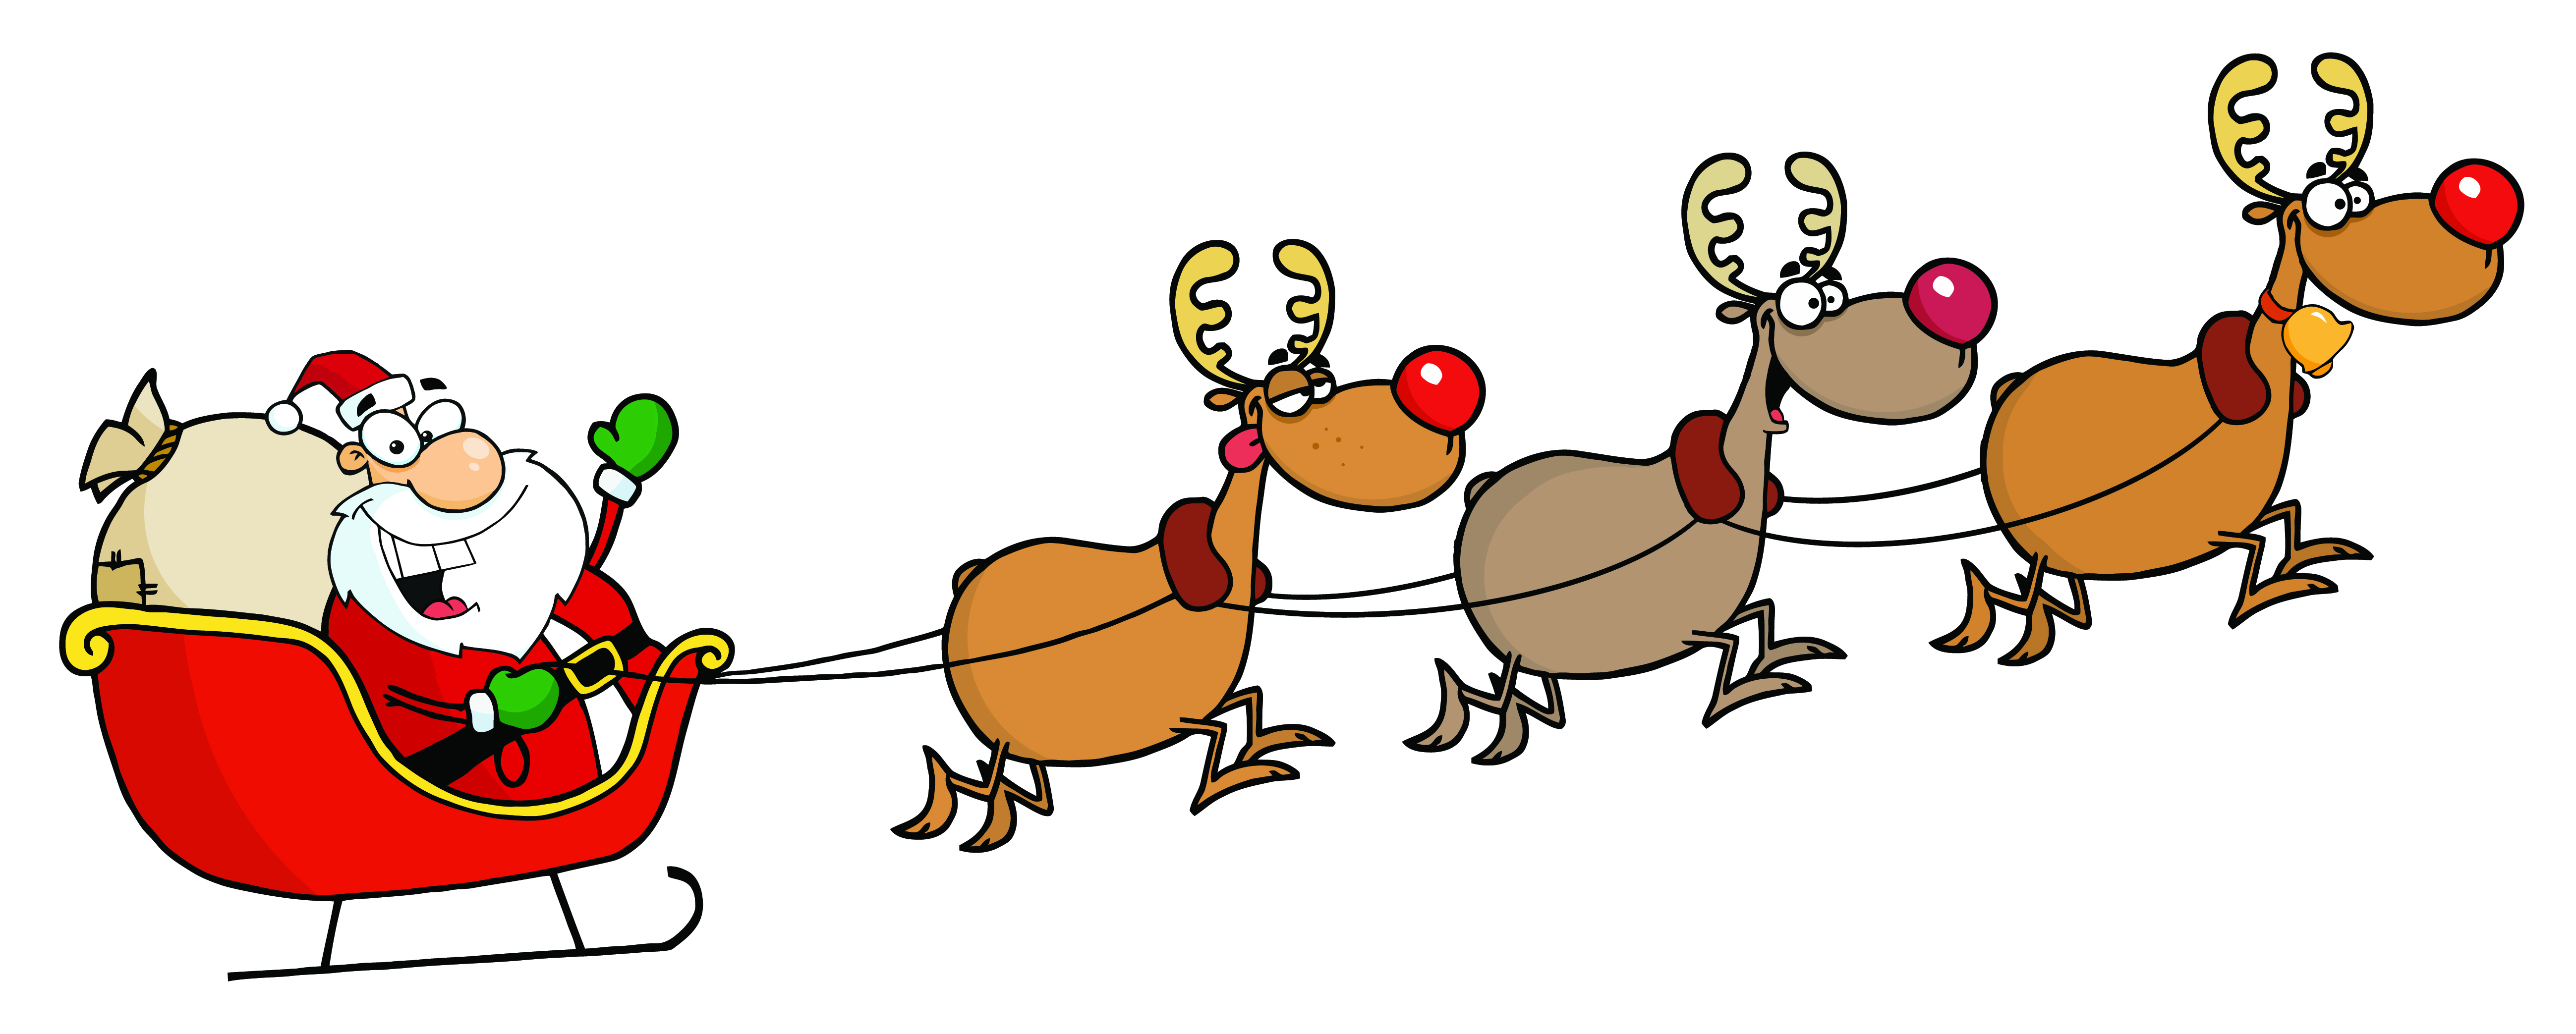 Free Santa Claus Cartoon Pictures, Download Free Santa Claus Cartoon